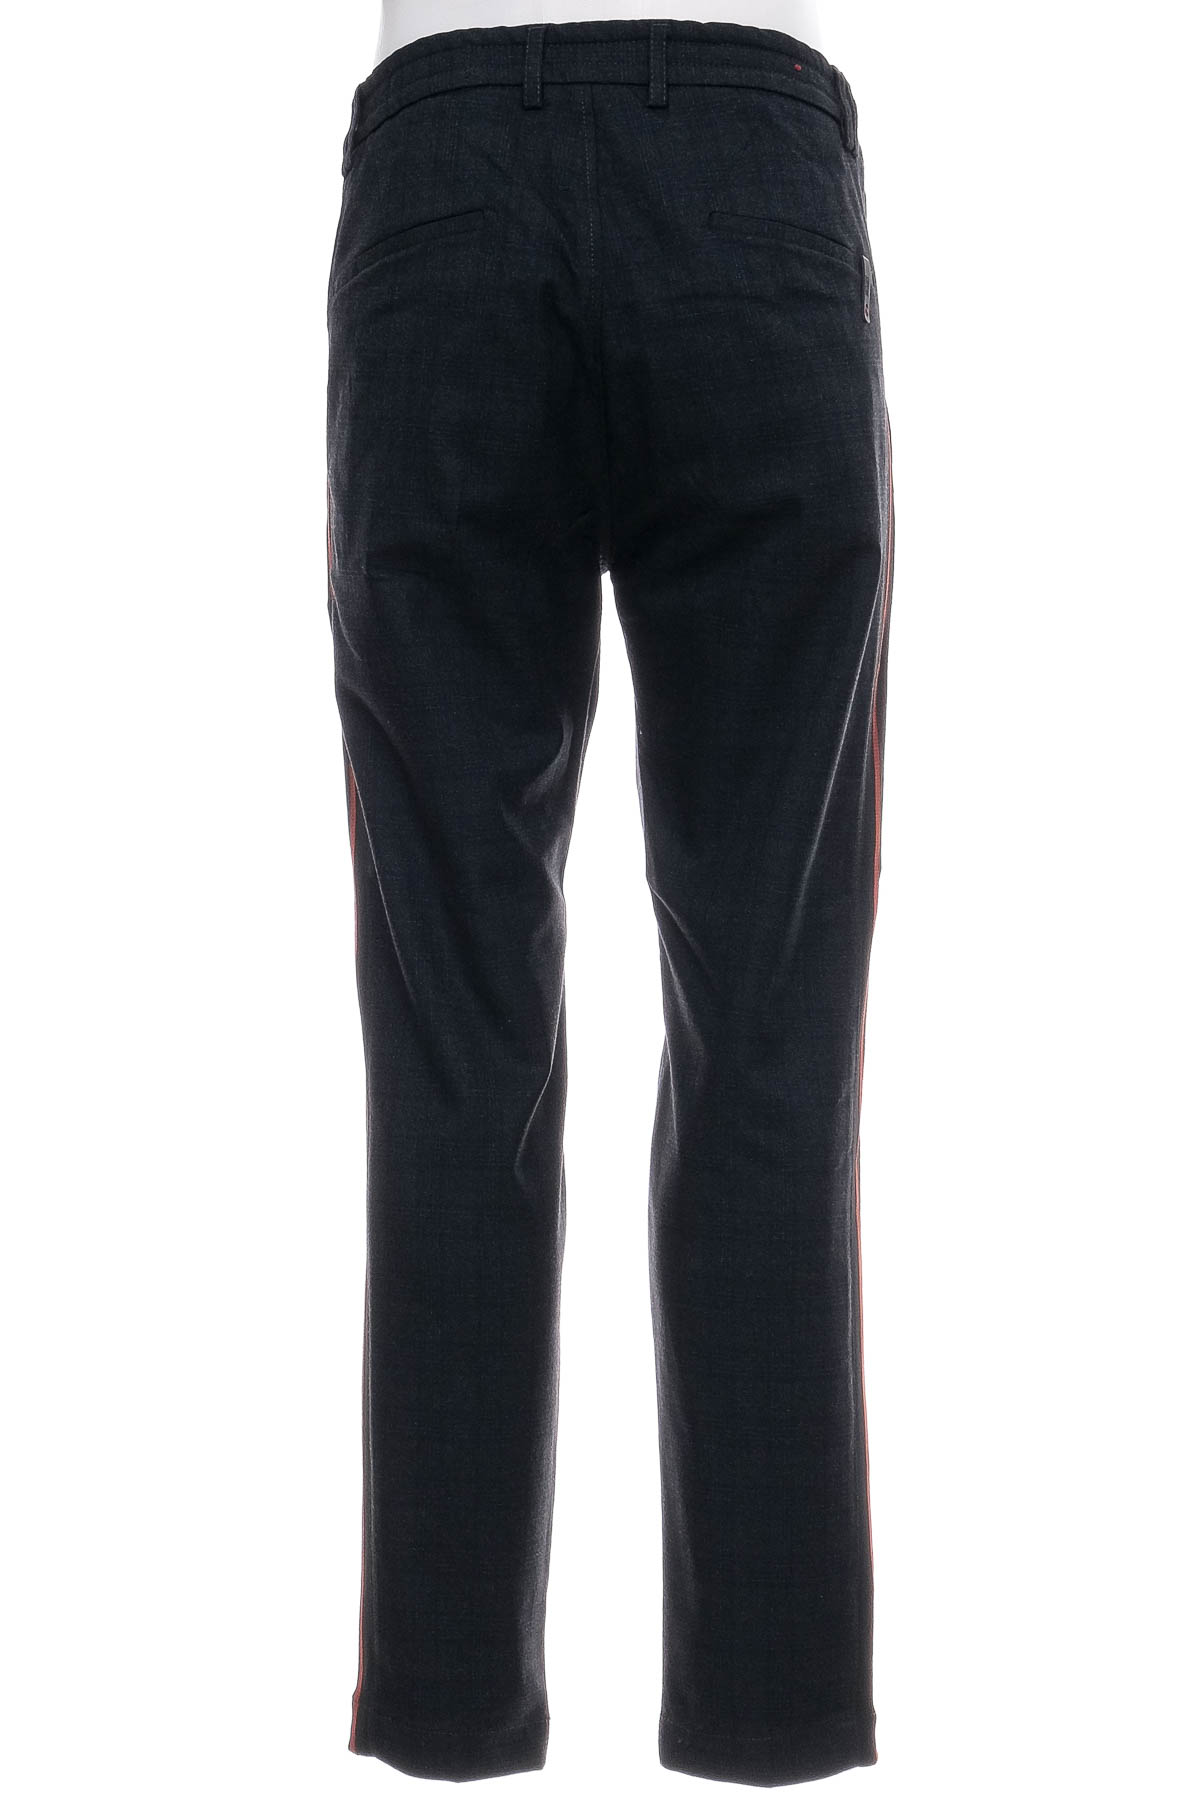 Men's trousers - CINQUE - 1